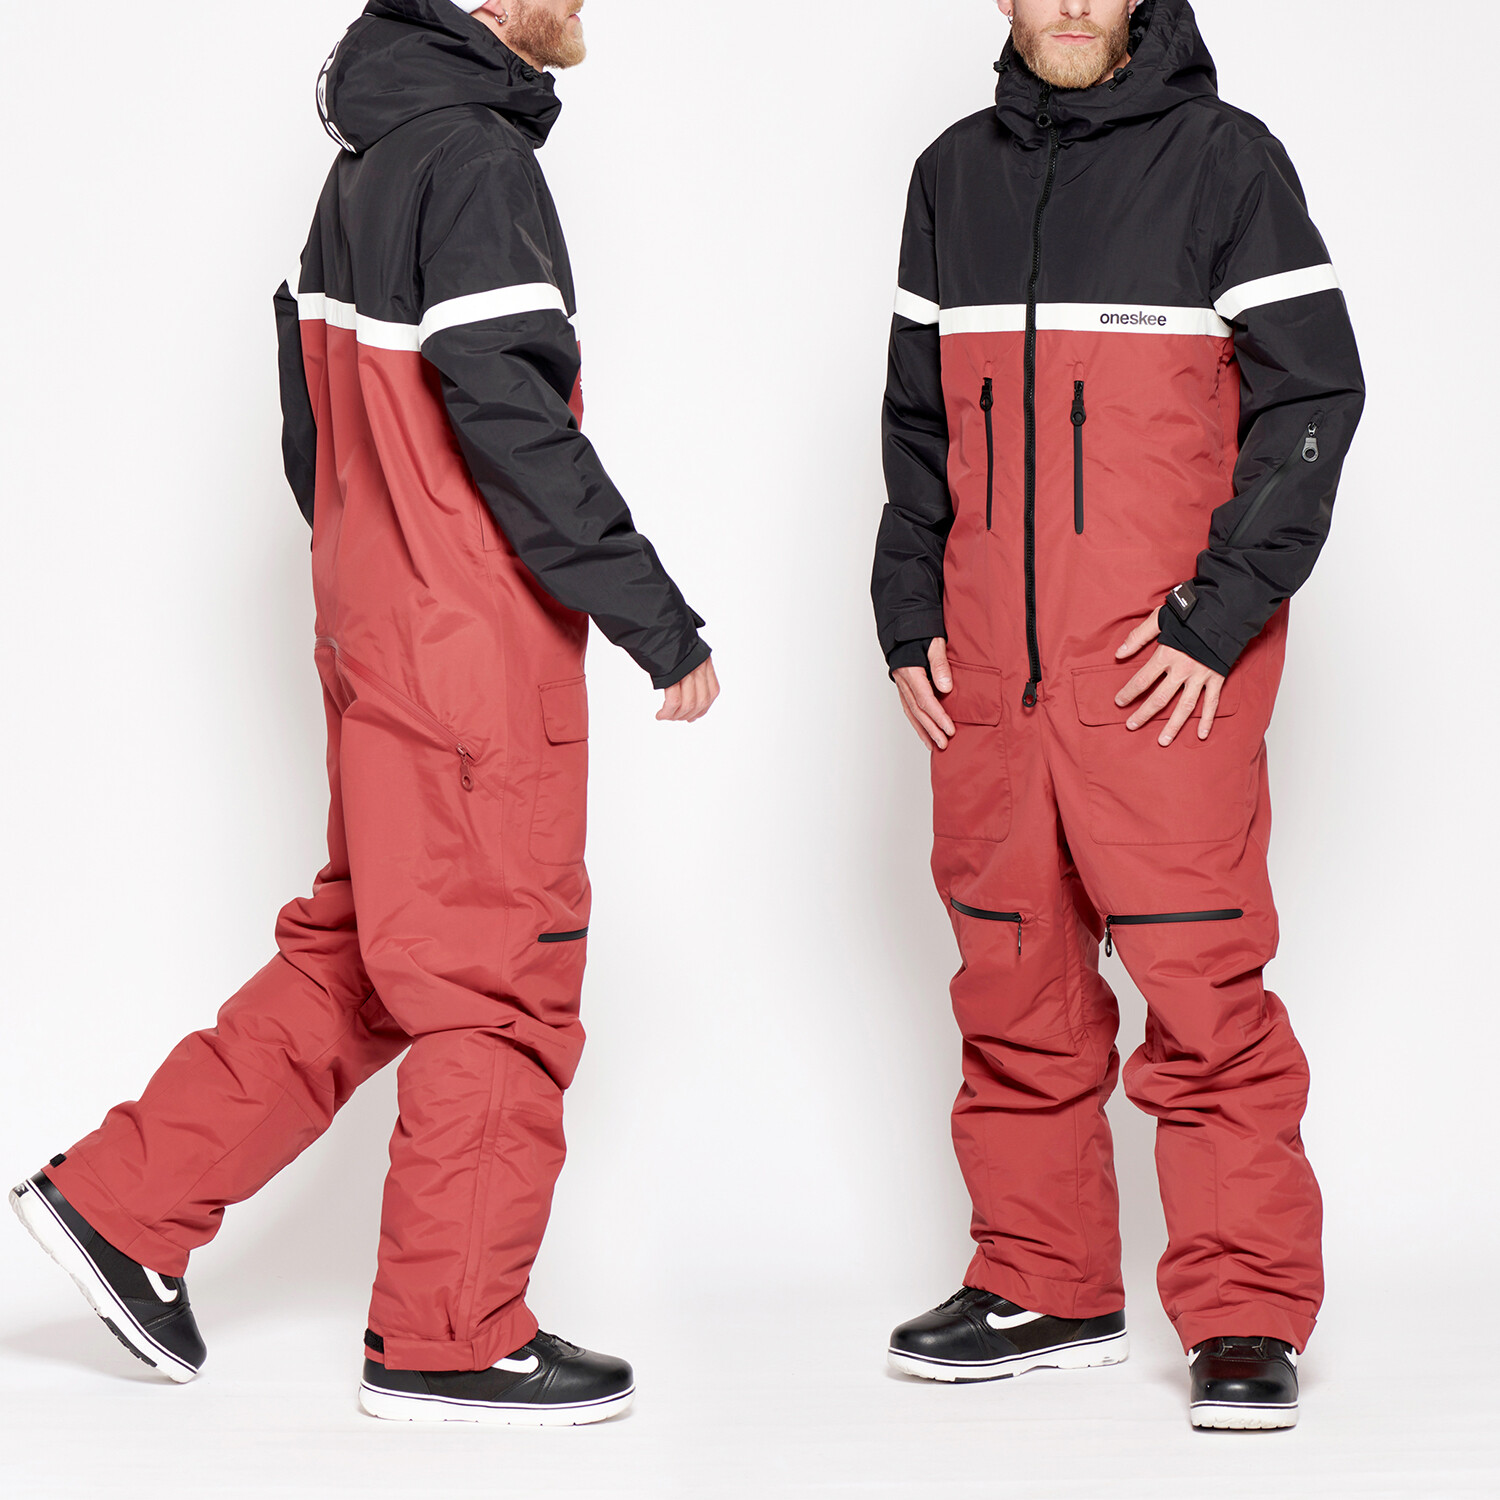 Oneskee Men's Mark VII 25k Ski Suit // Burgundy + Black (S) - Oneskee  All-In-One Ski Suits - Touch of Modern